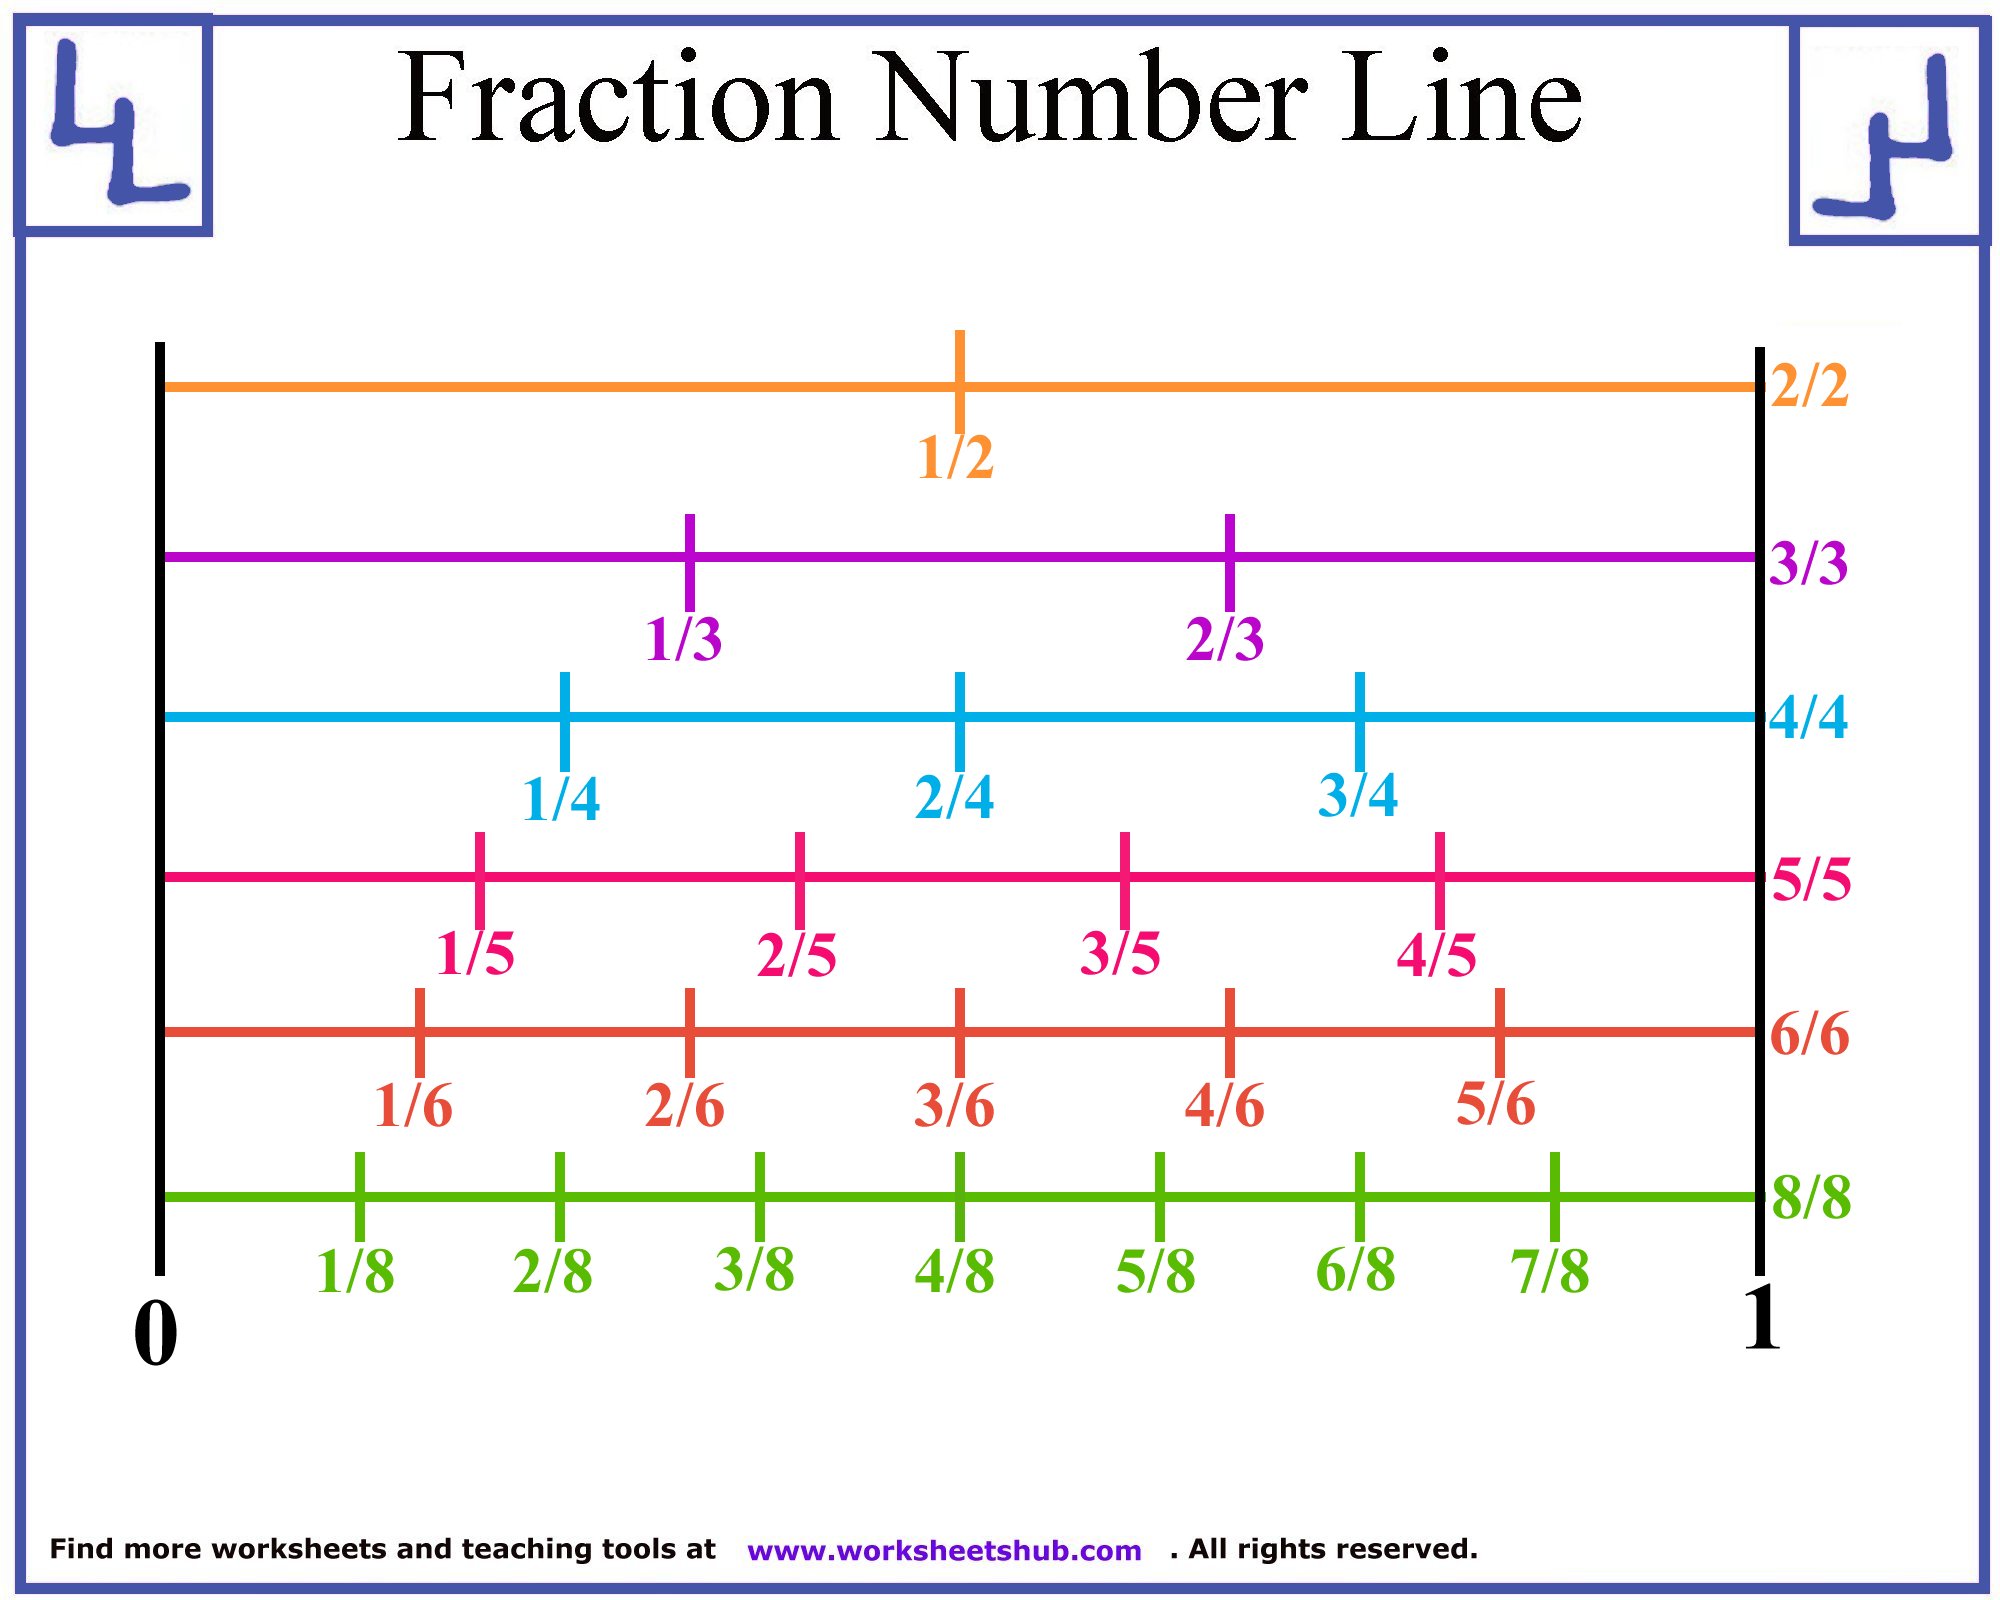 fraction-number-line-printable